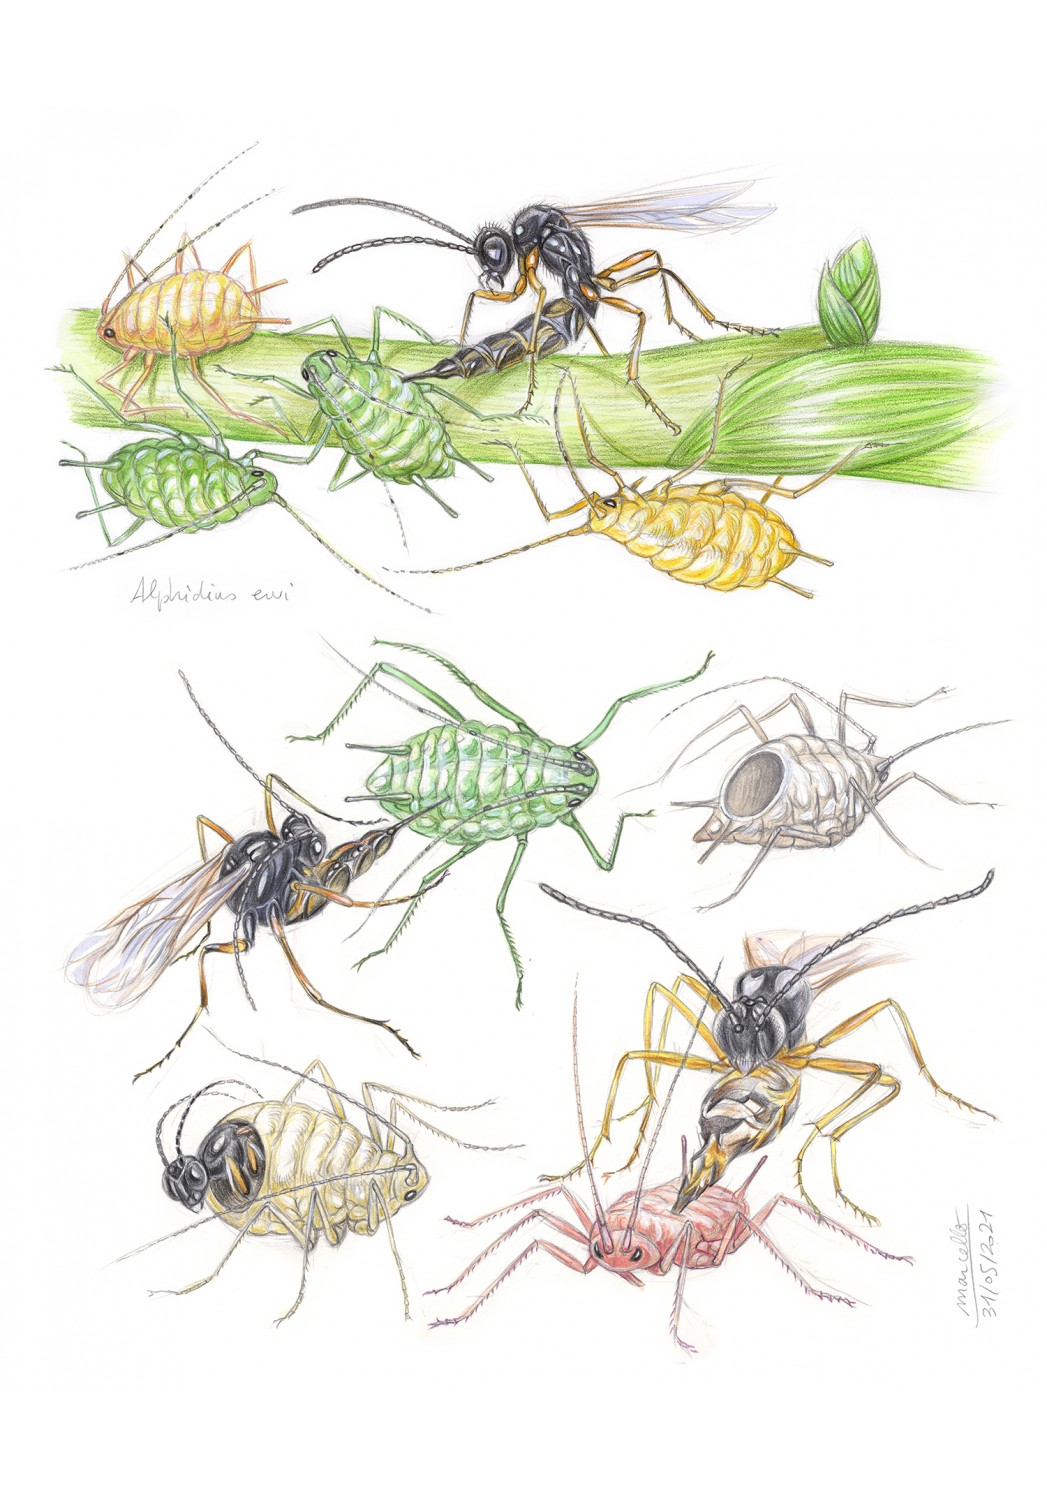 Marcello-art: Entomology 429 - Aphidius ervi